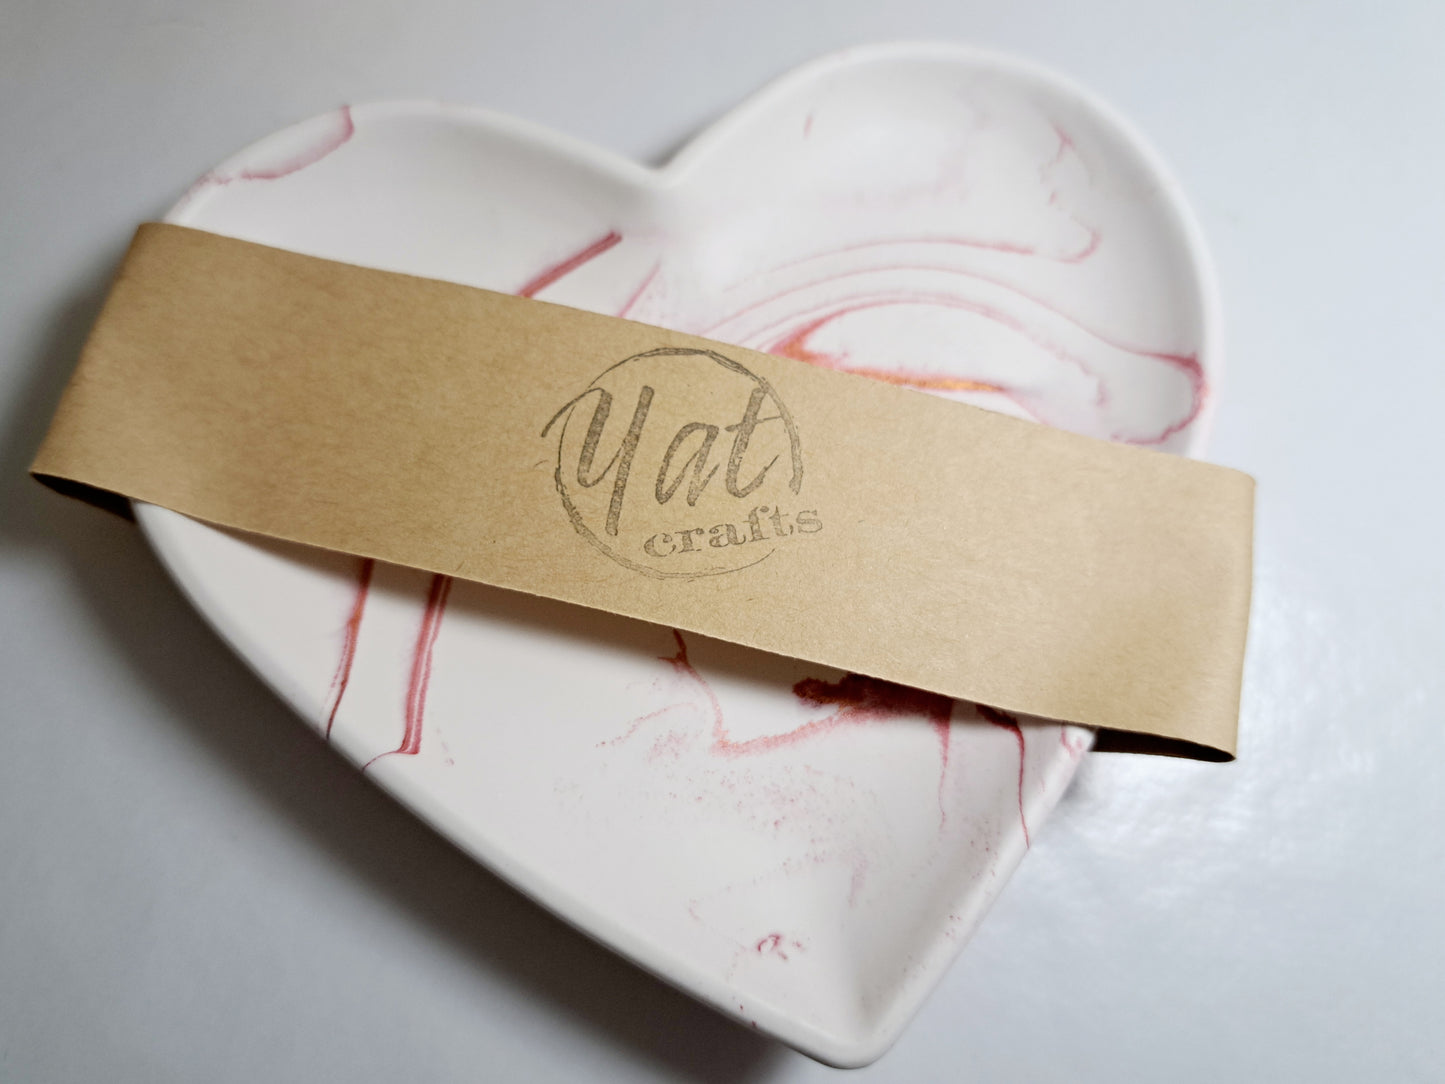 Heart Shaped Trinket Dish - Yat Crafts